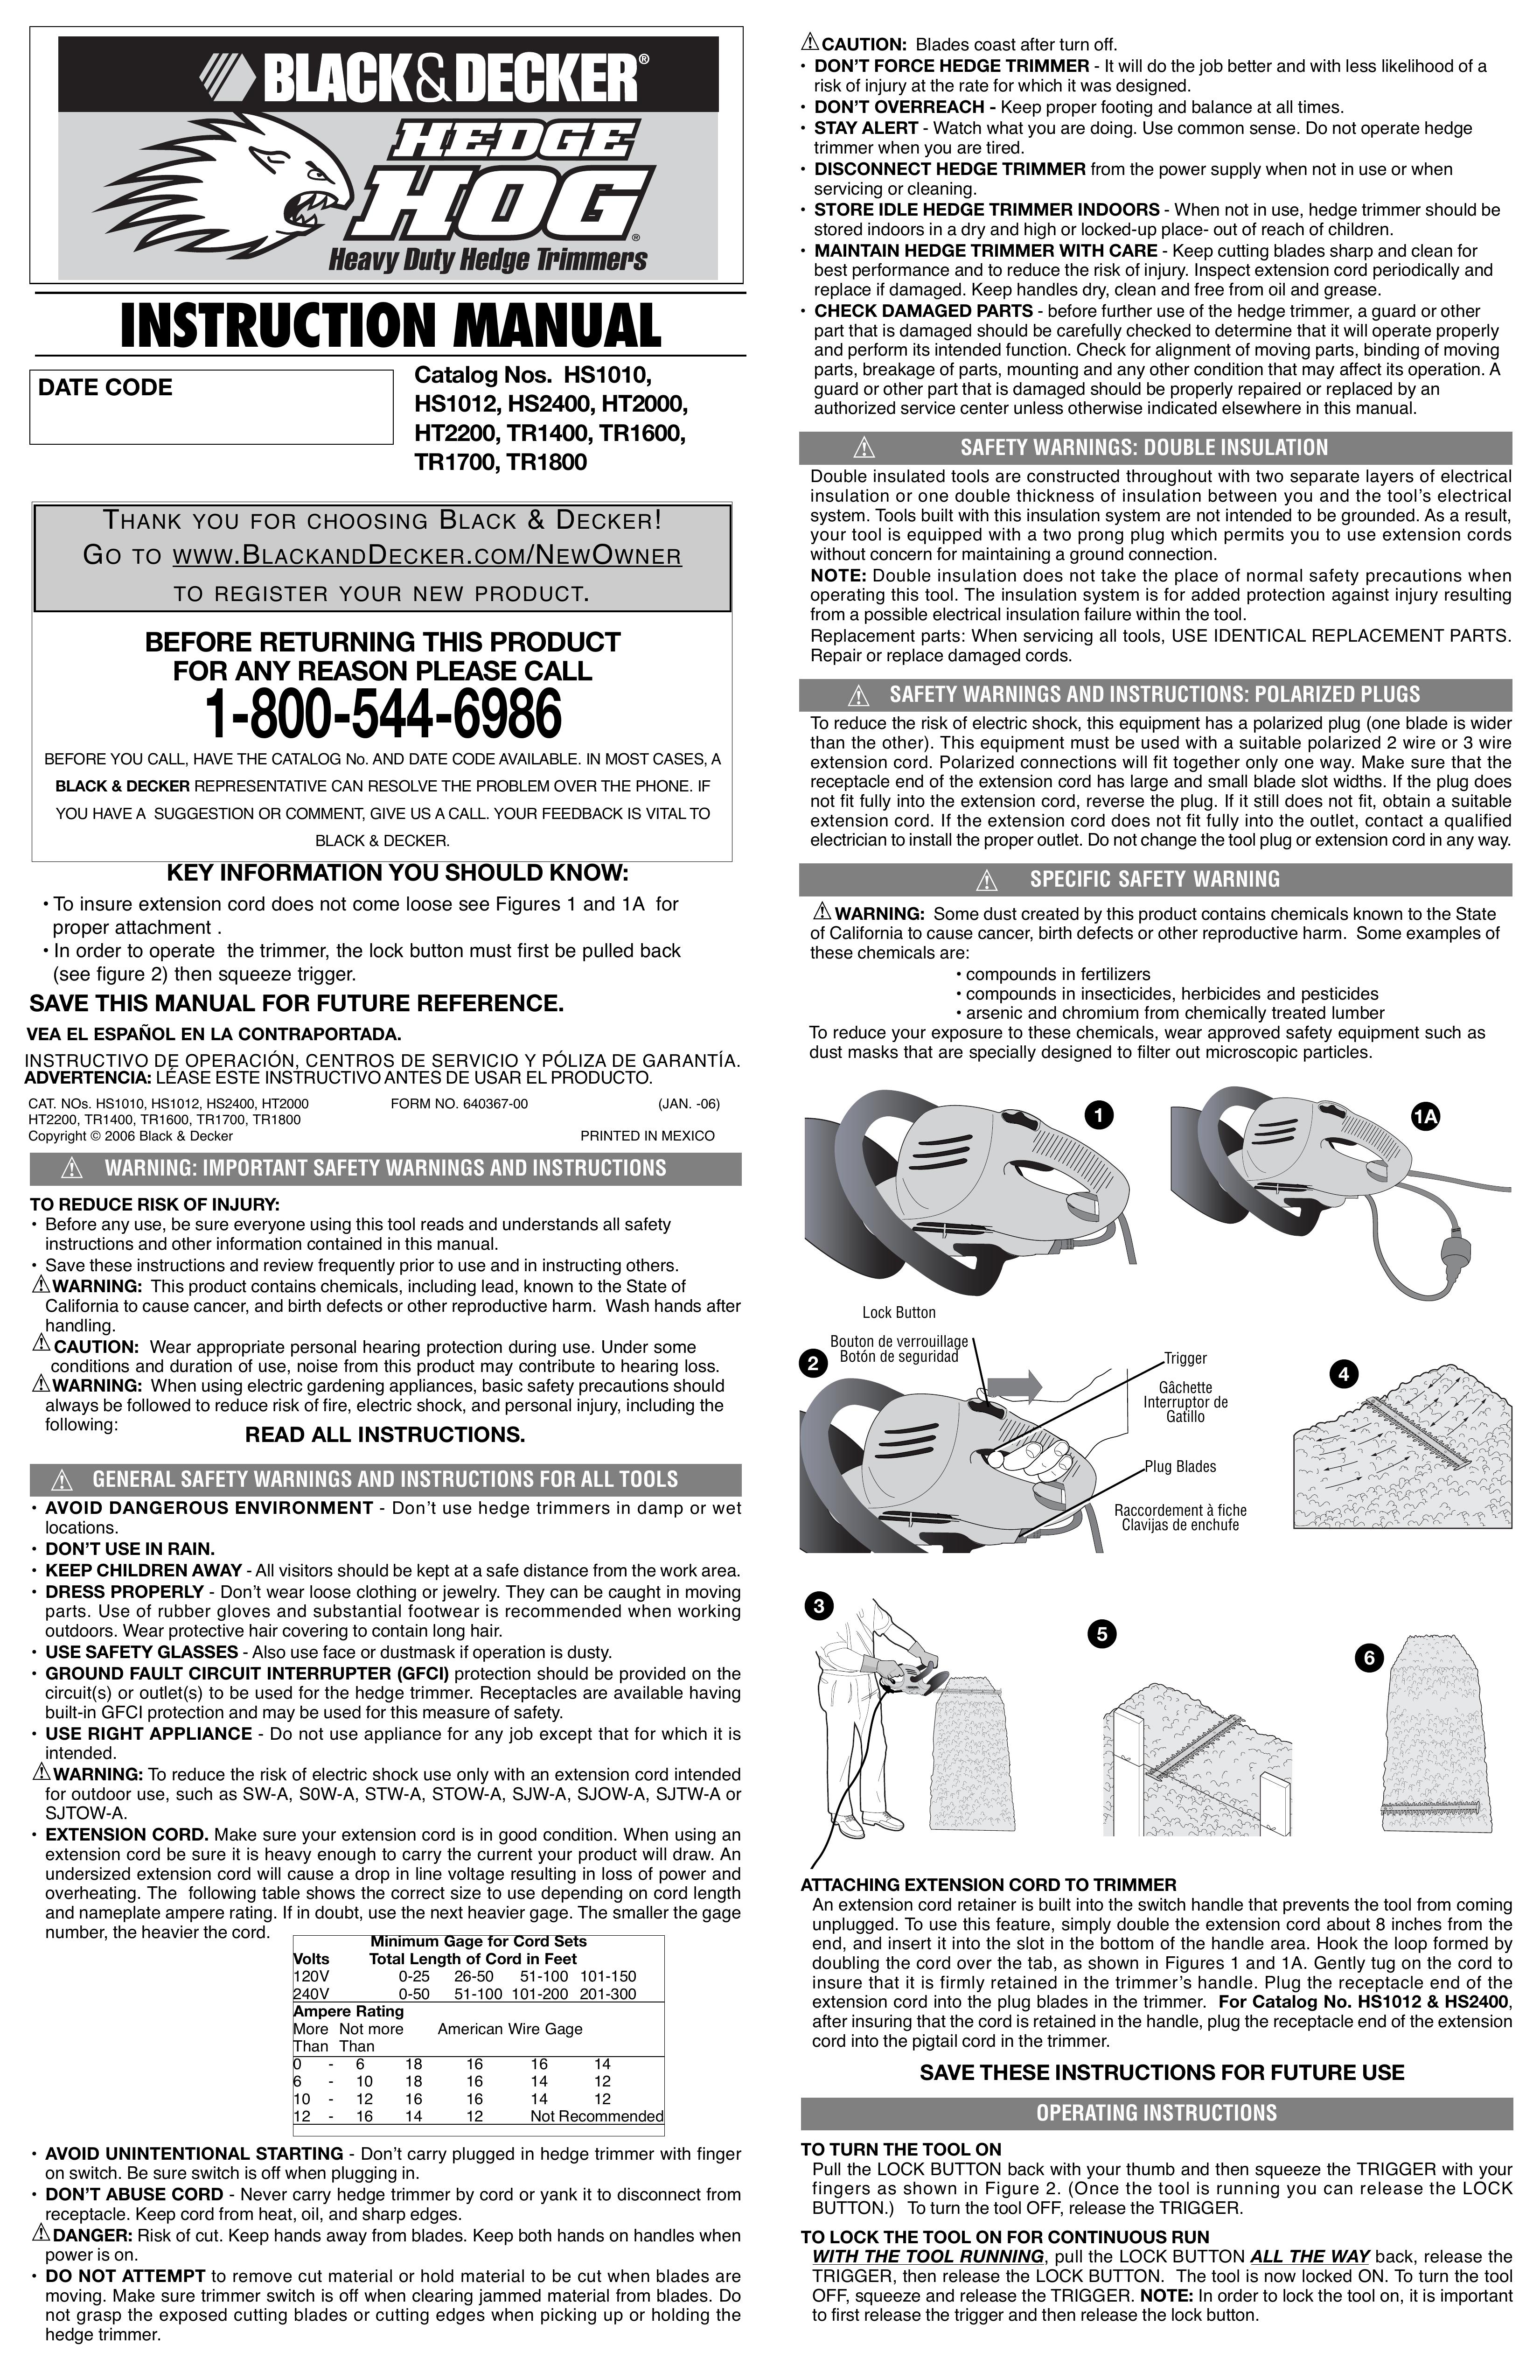 Black & Decker 40367-00 Trimmer User Manual